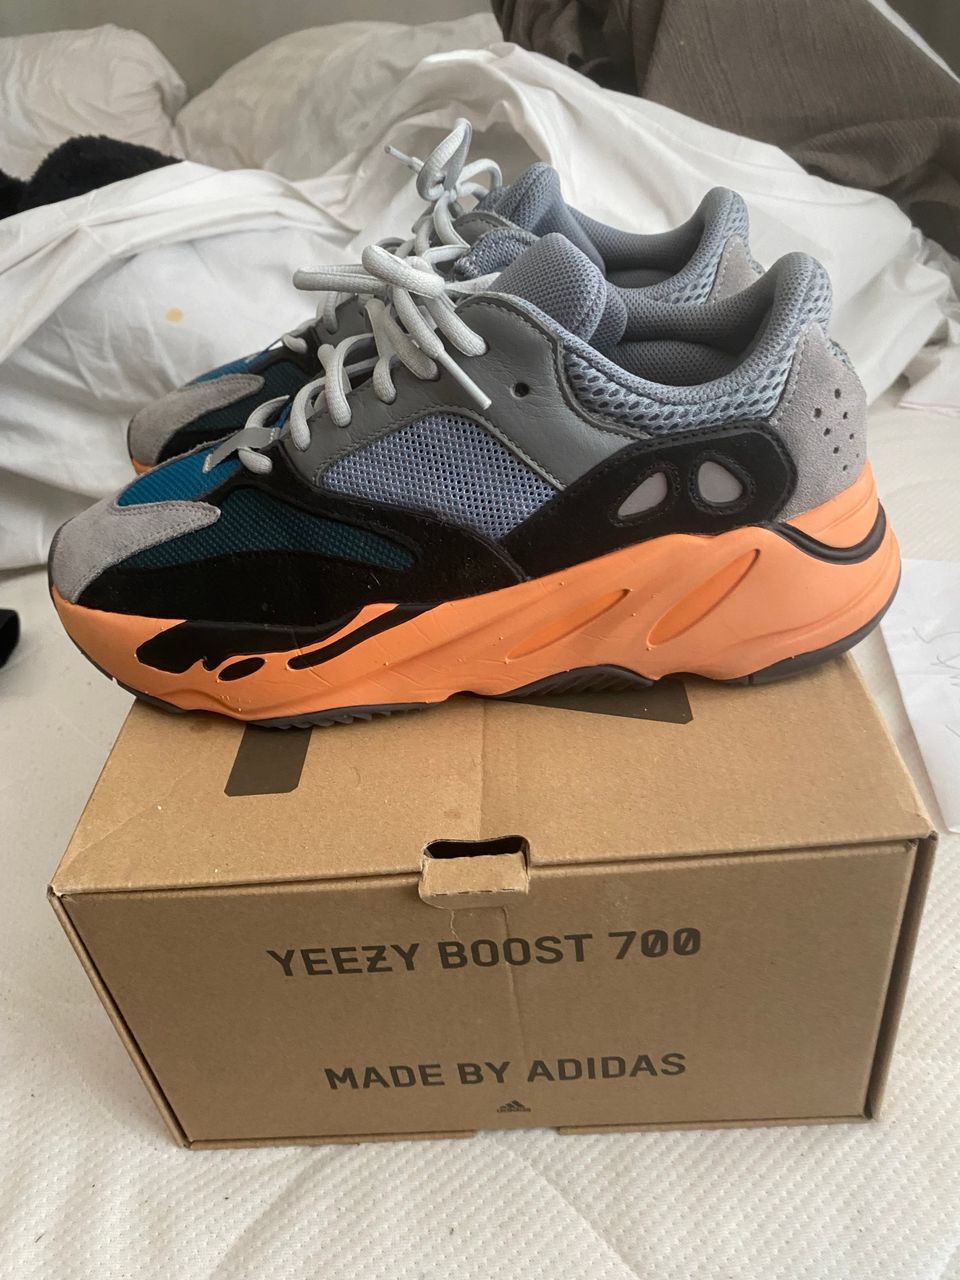 Adidas Yeezy boost 700